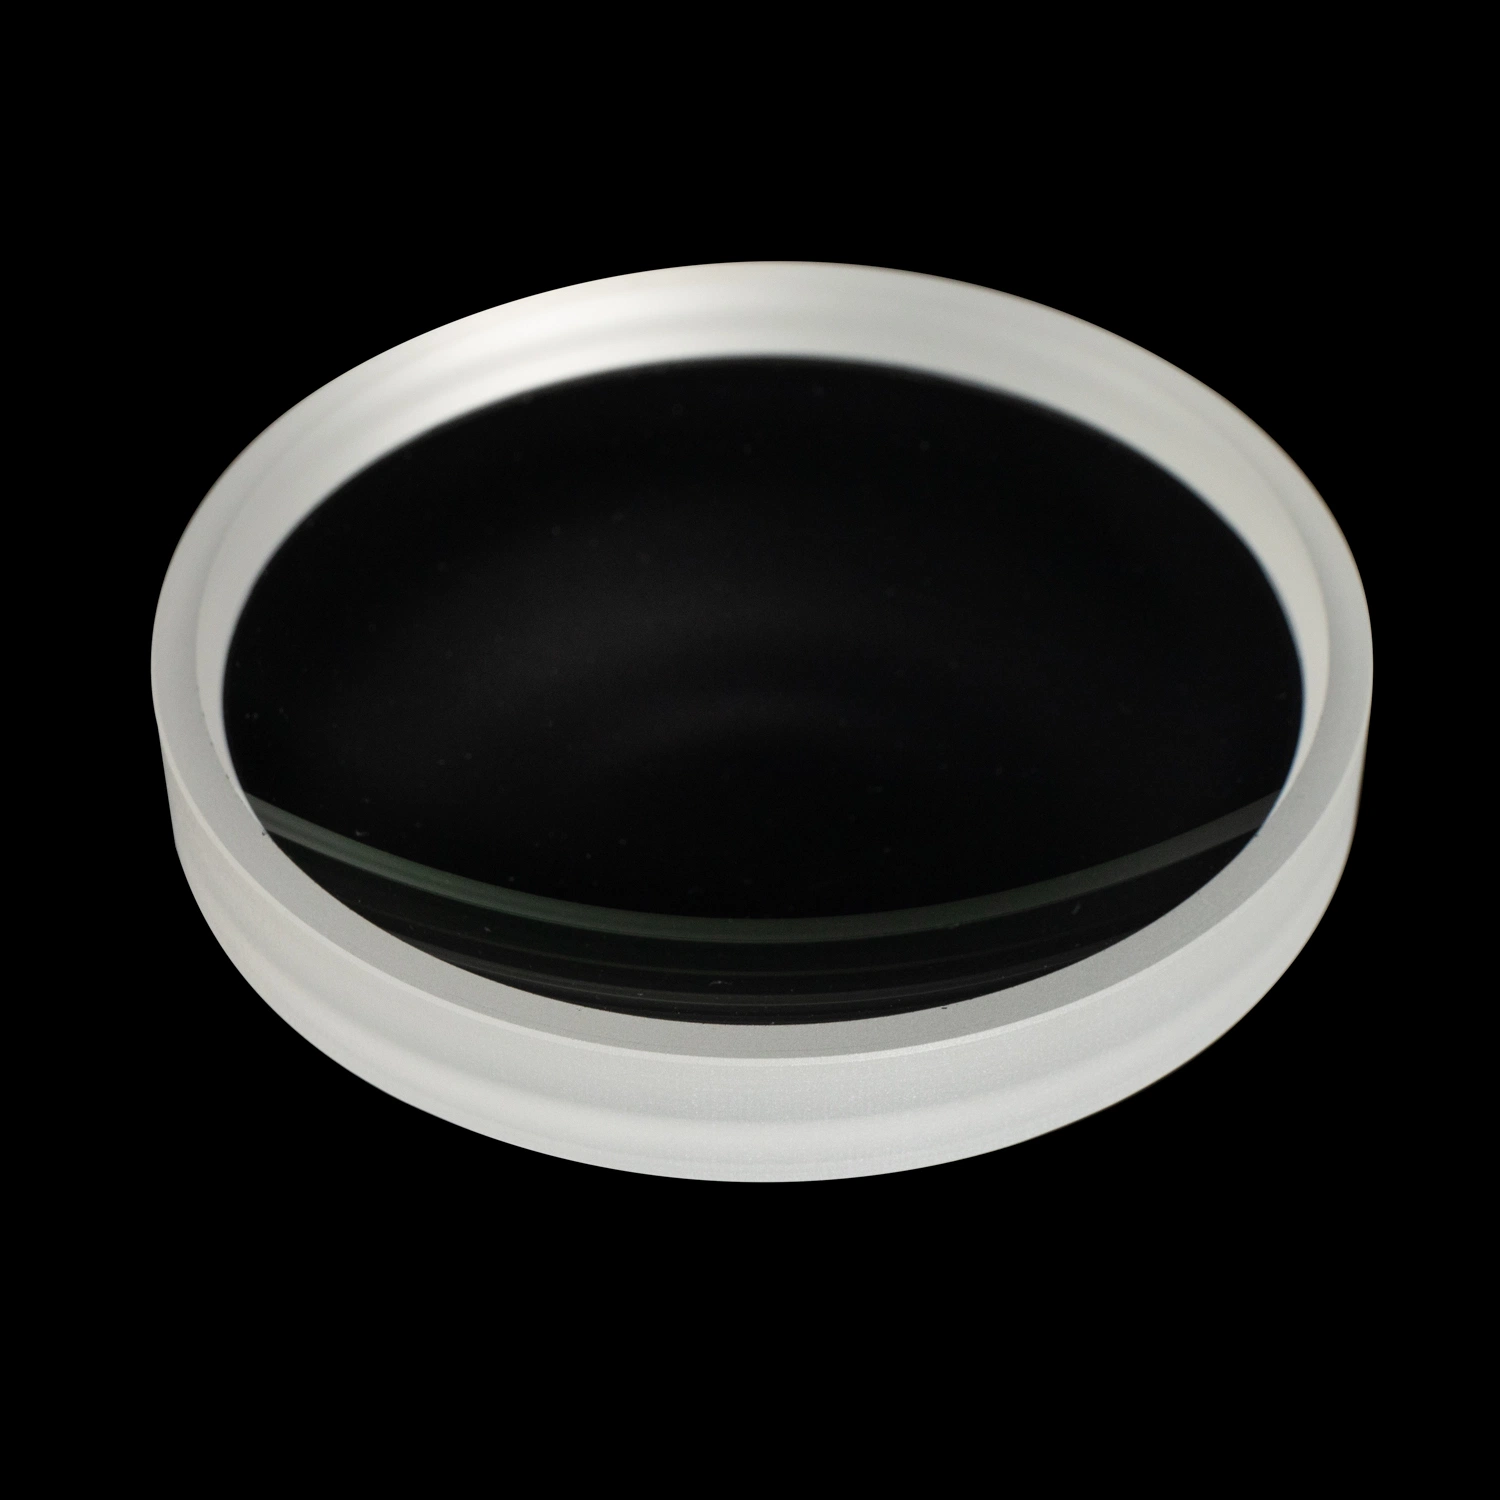 K9 ivex Lens/Uncoated/Diameter 20/25,4 mm/Focusing BIMvex Lens/Beam Expuling Collimator/K9 Optical Glass